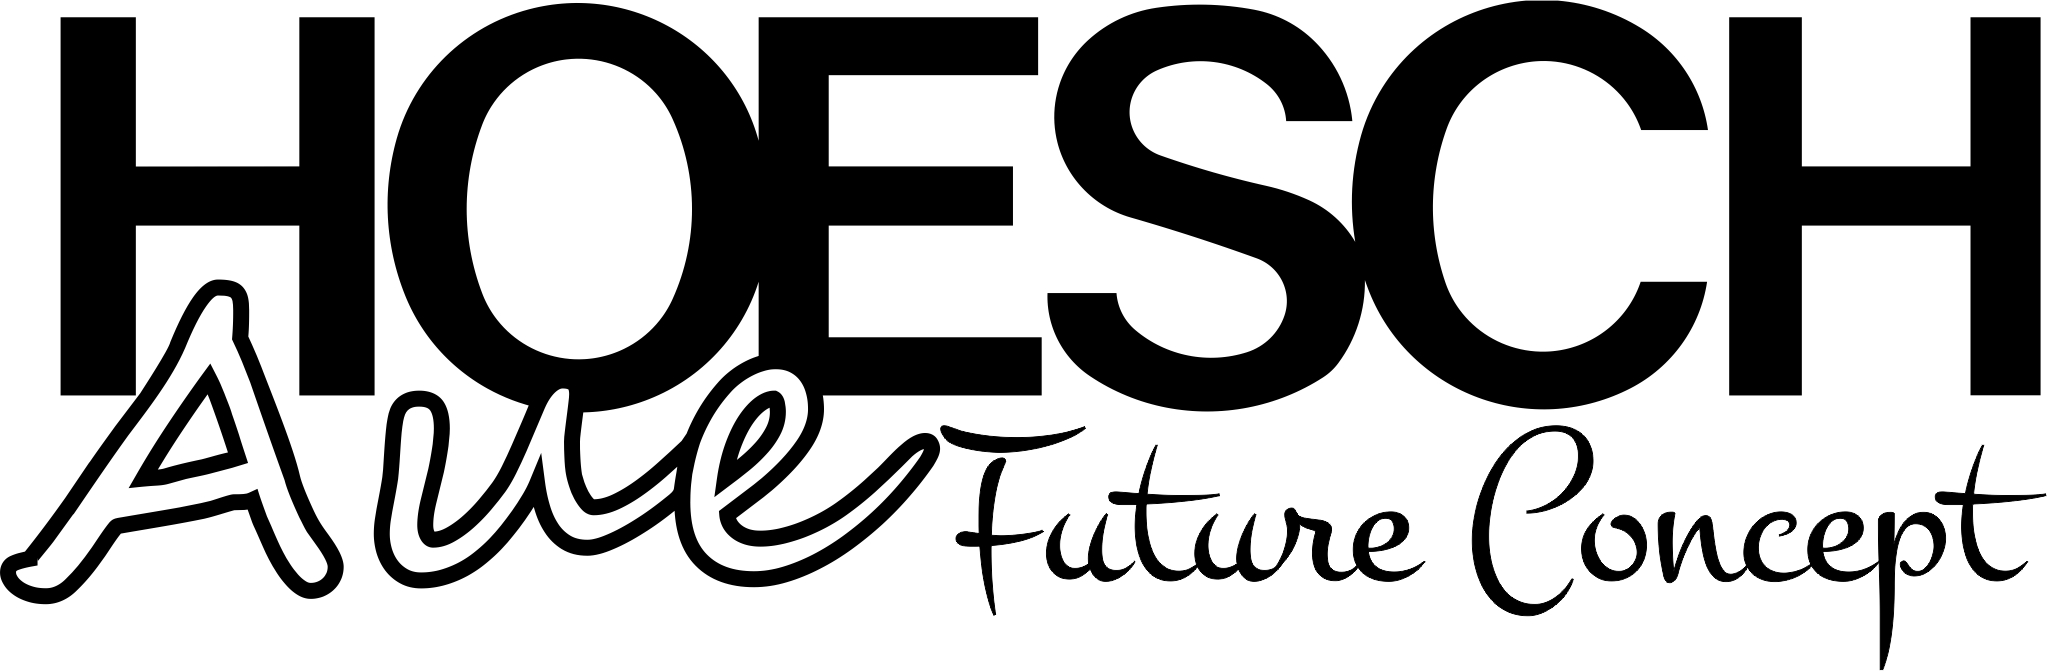 Logo HOESCH Aue Kreuzau - Future Concept